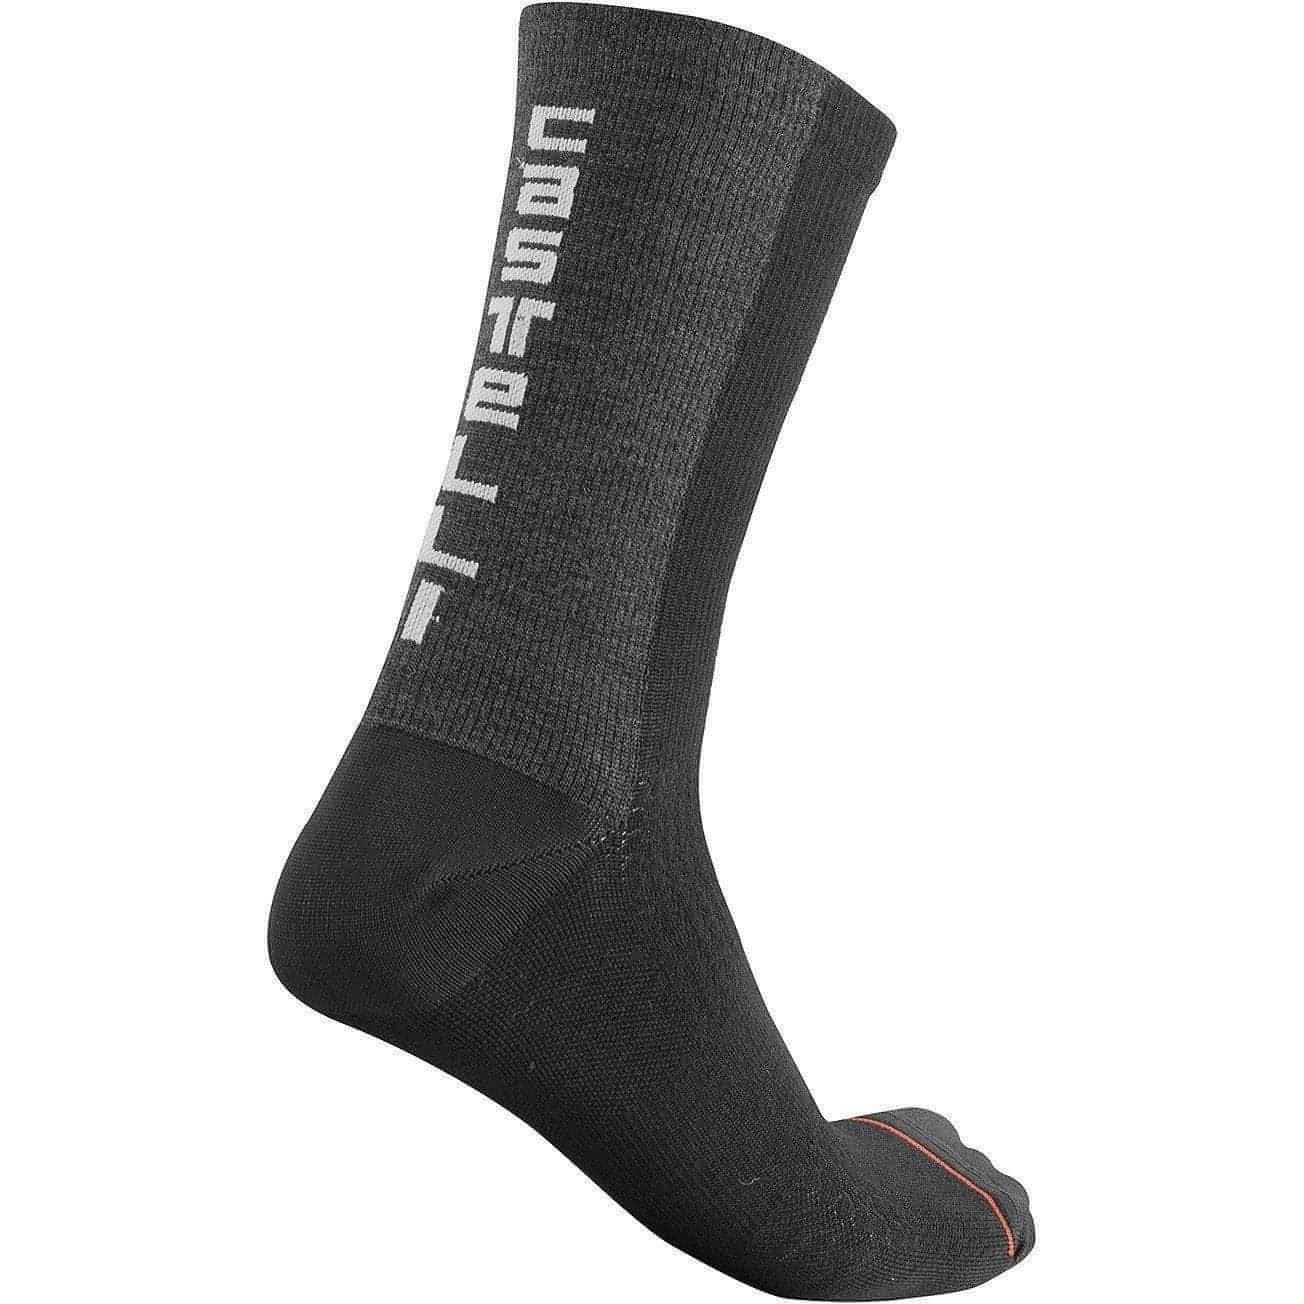 Castelli Bandito Wool 18 Cycling Socks - Black - Start Fitness